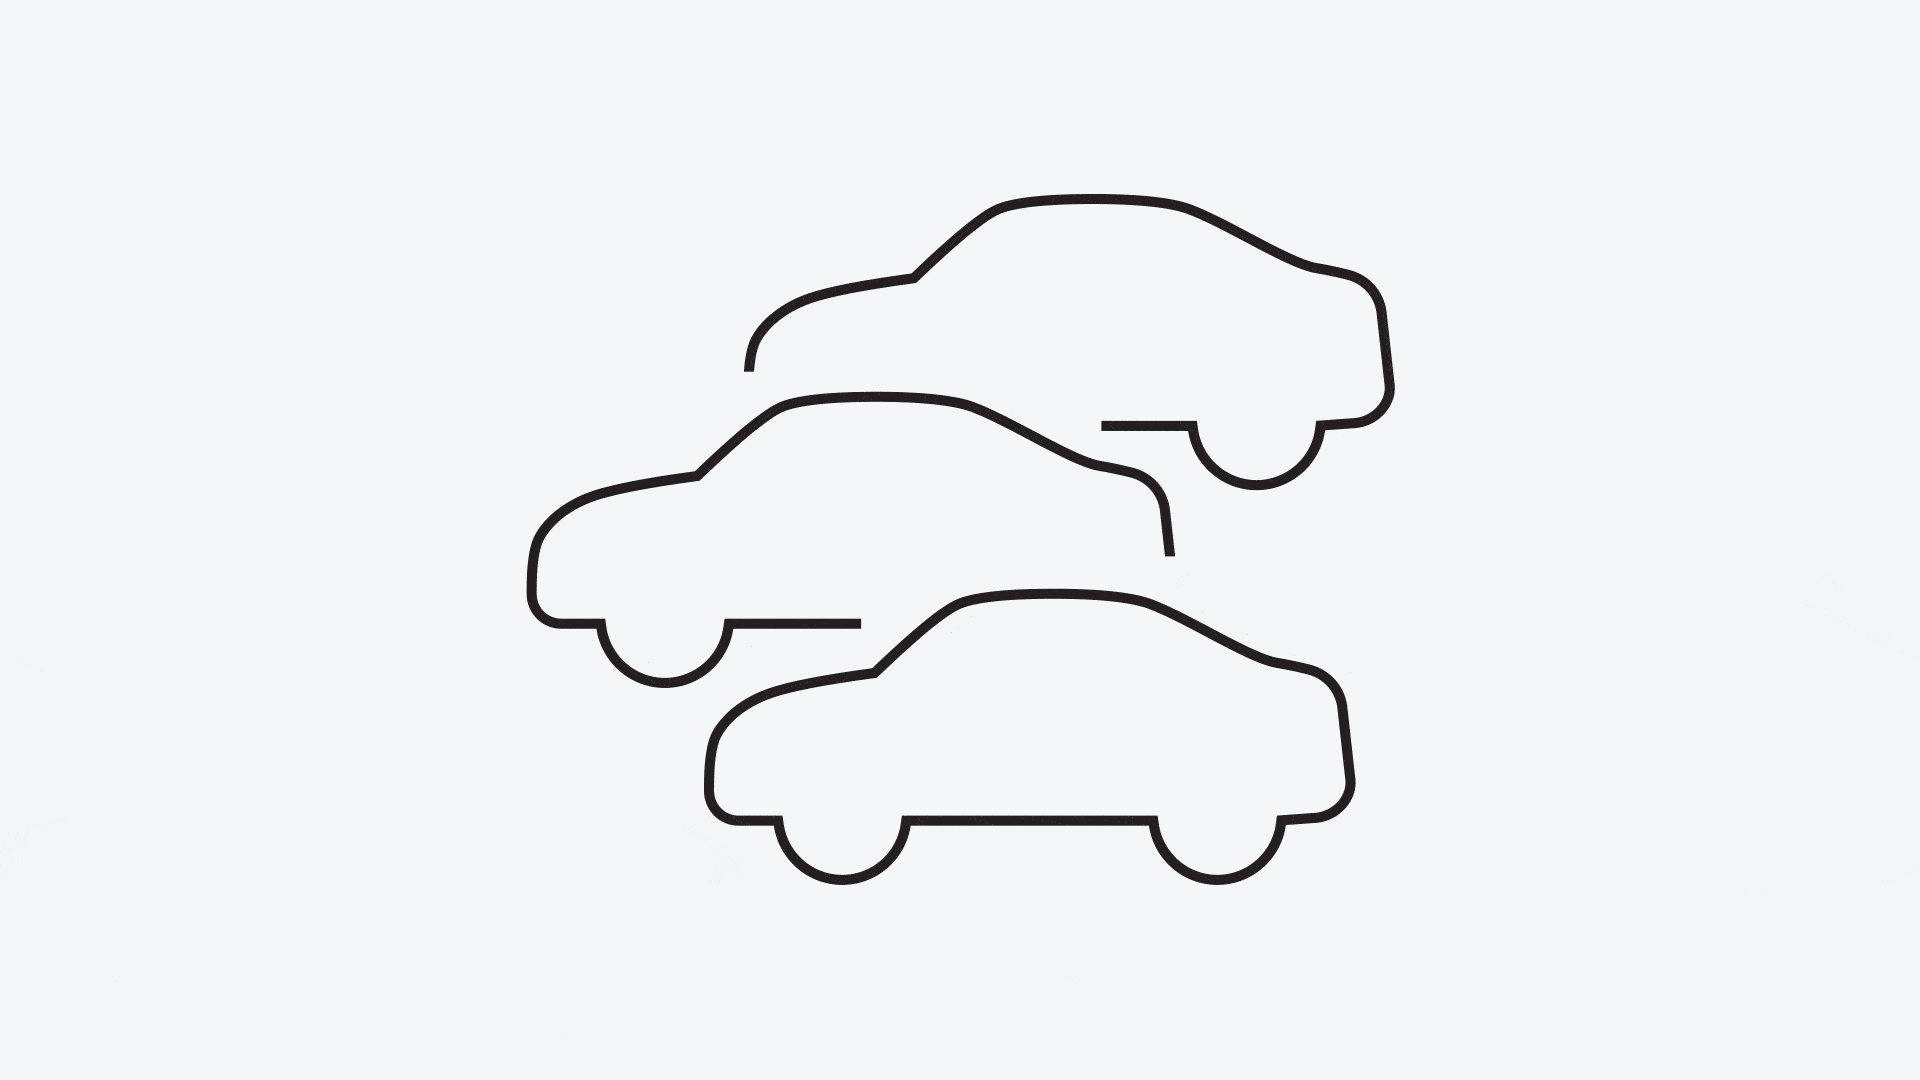 Illustration of vehicle silhouettes